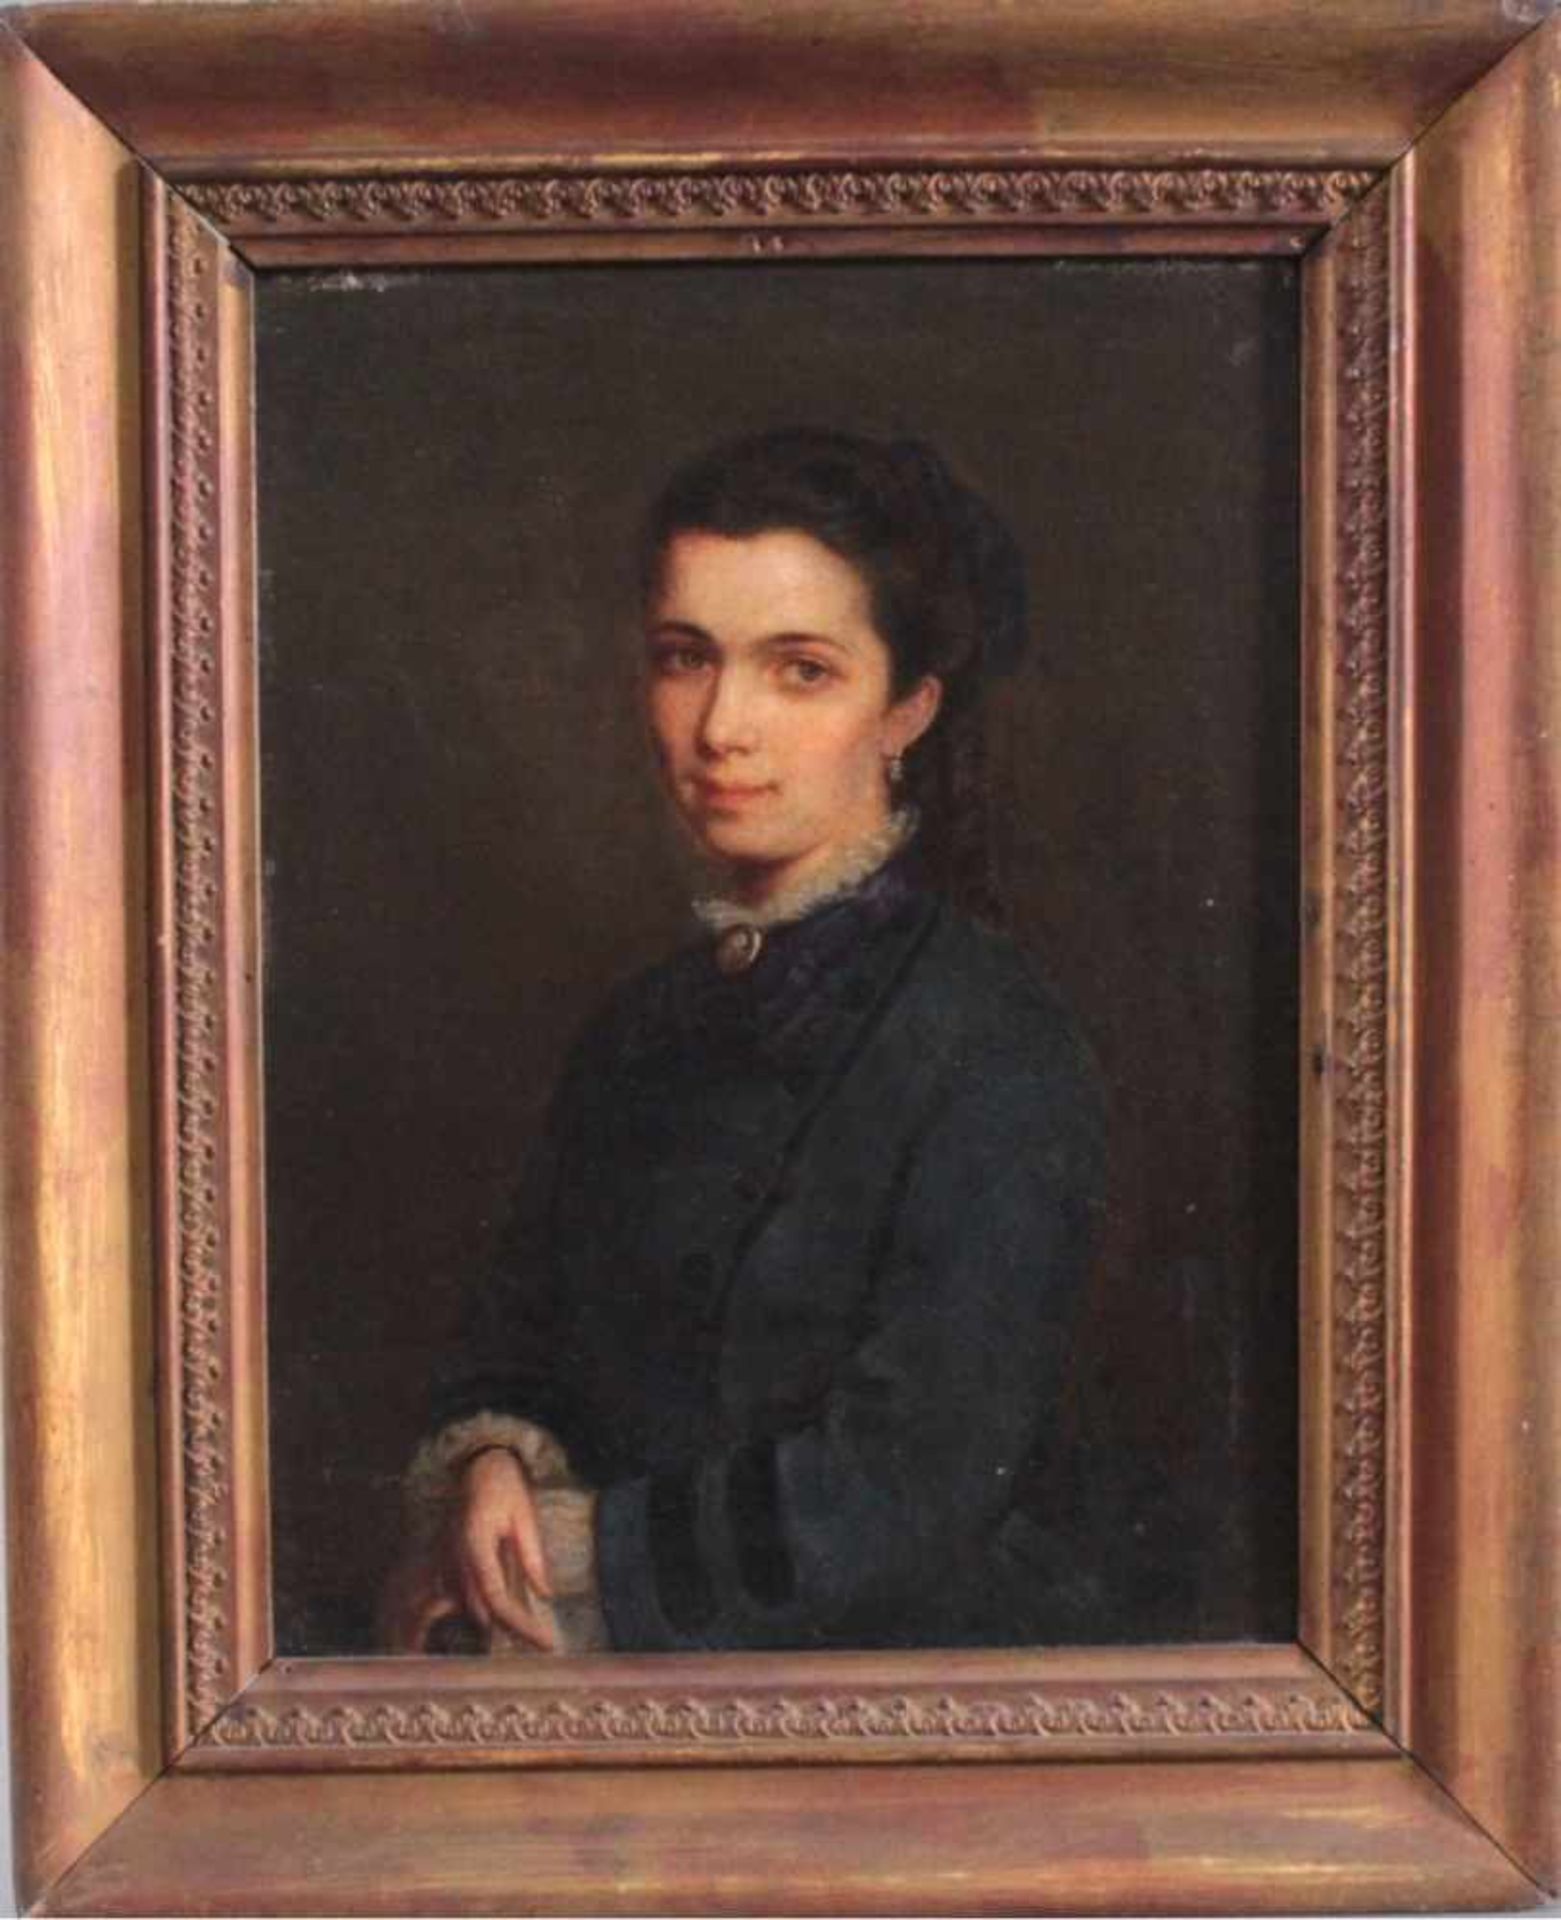 DamenportraitÖl auf Faserplatte gemalt, unten links signiert, datiert1875, gerahmt, ca. 32 x 24 cm.